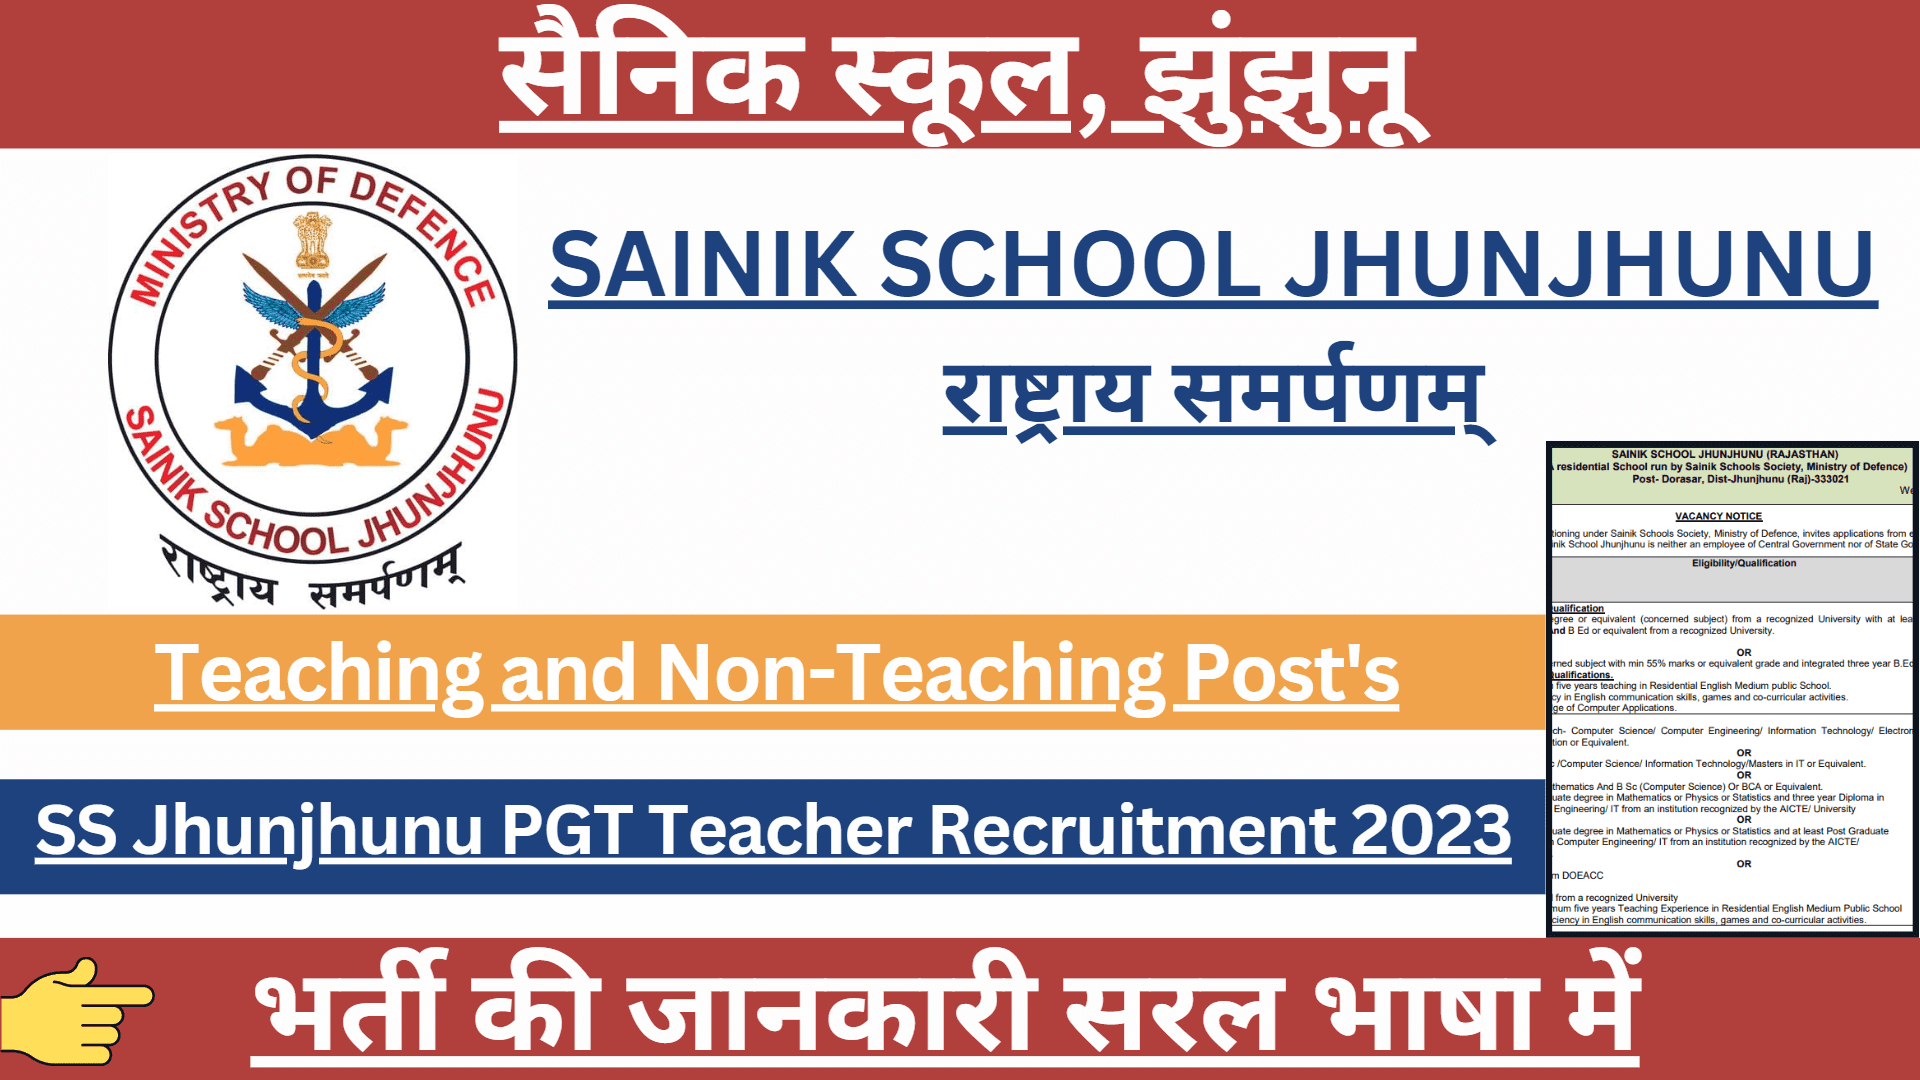 Sainik School Jhunjhunu PGT Teacher Recruitment